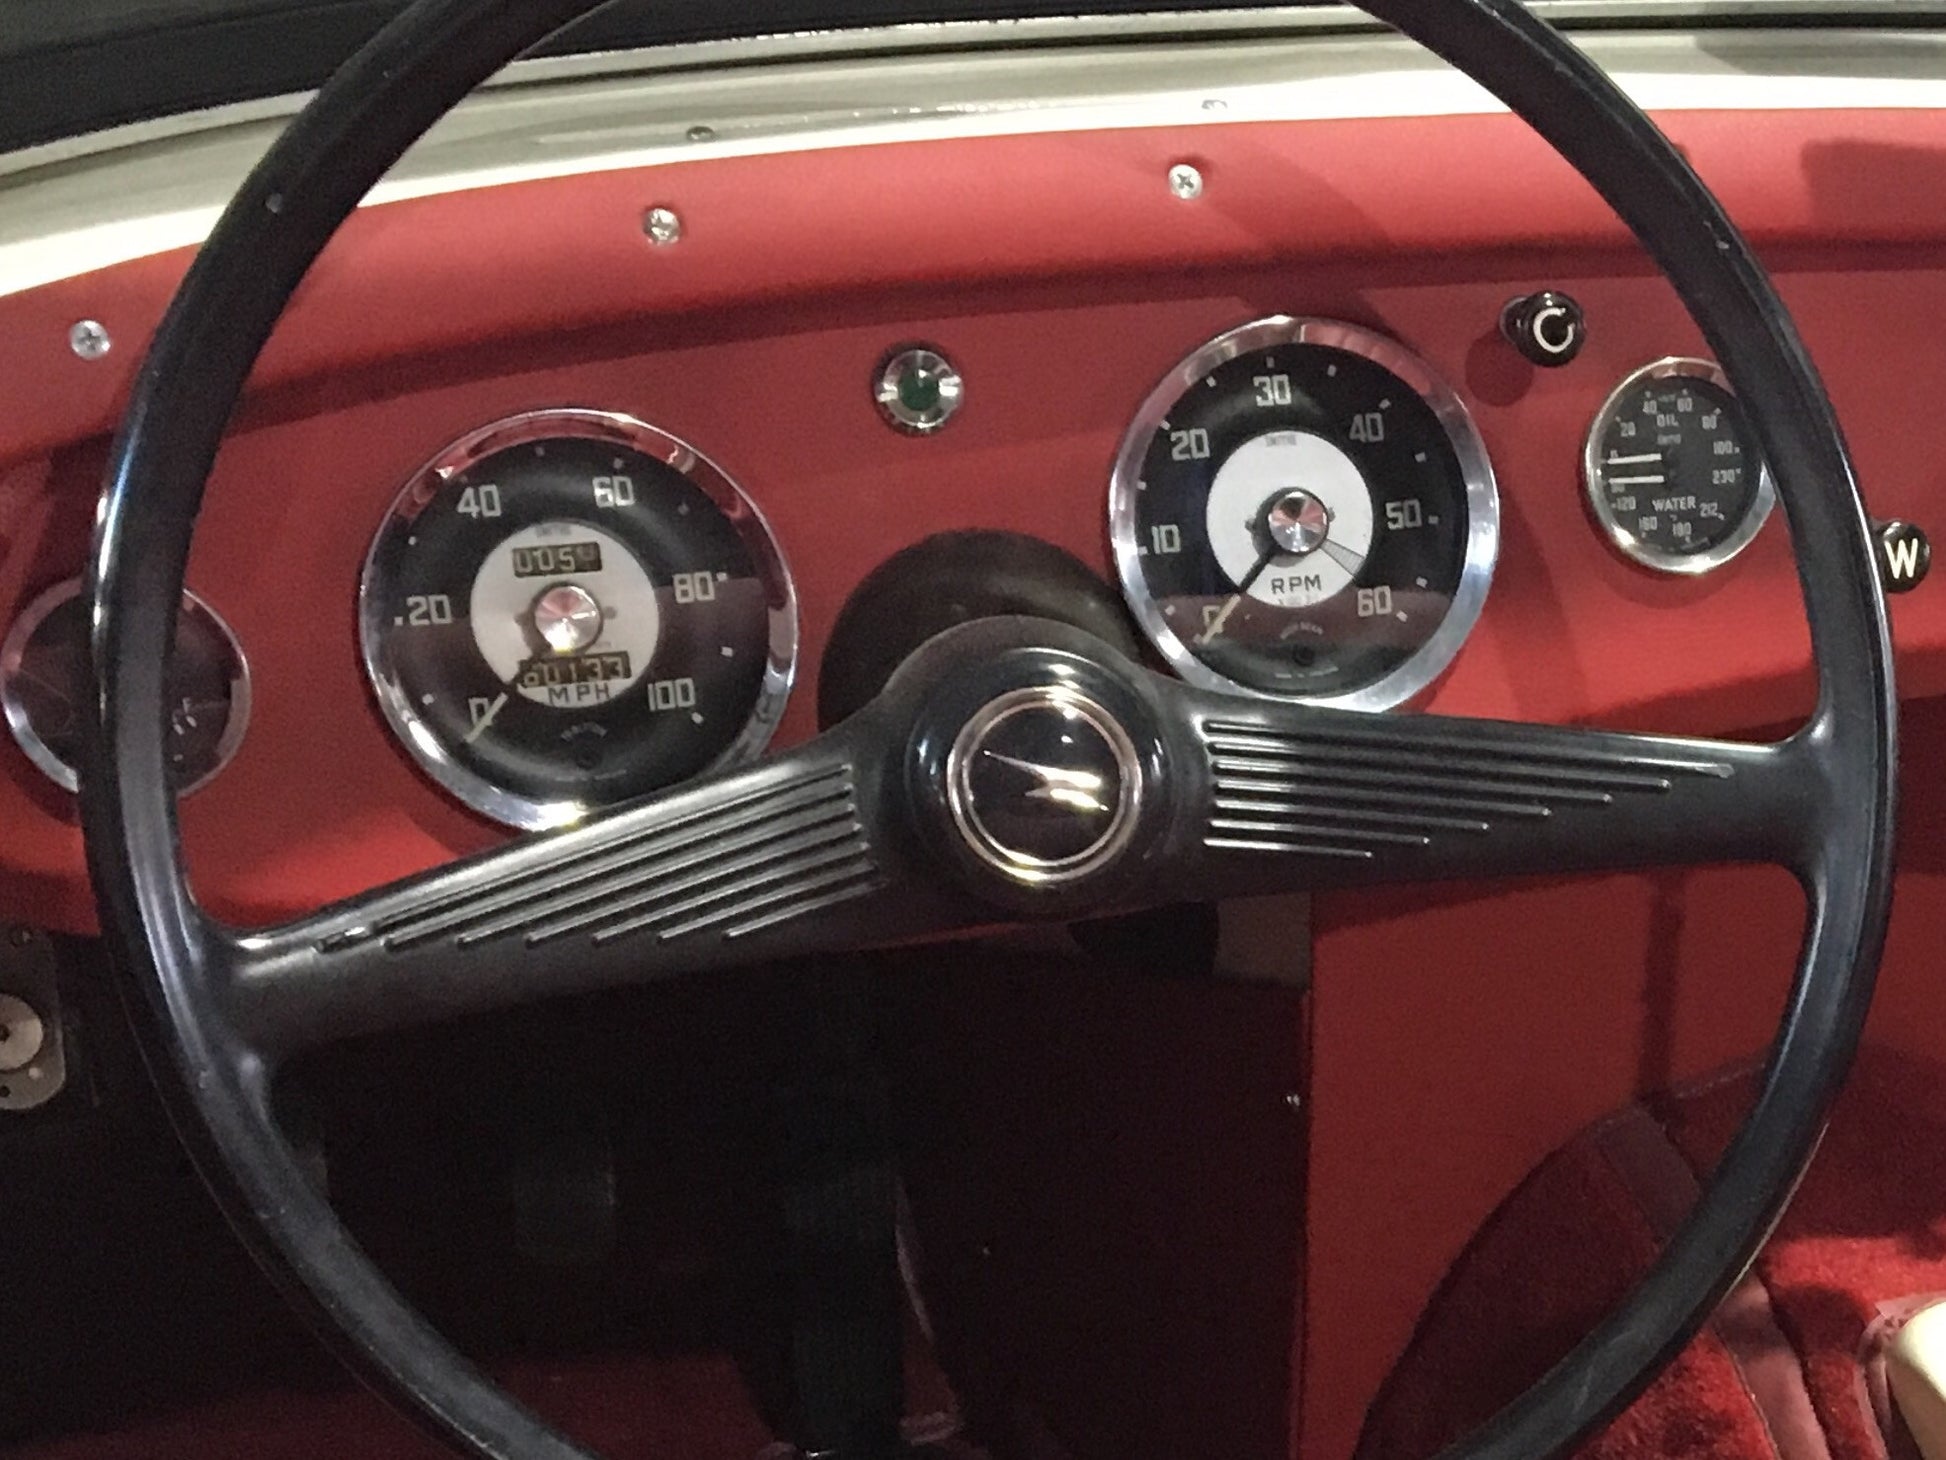 Austin Healey Sprite Dashboard Turn Signal Indicator Light Interior - Bugeye